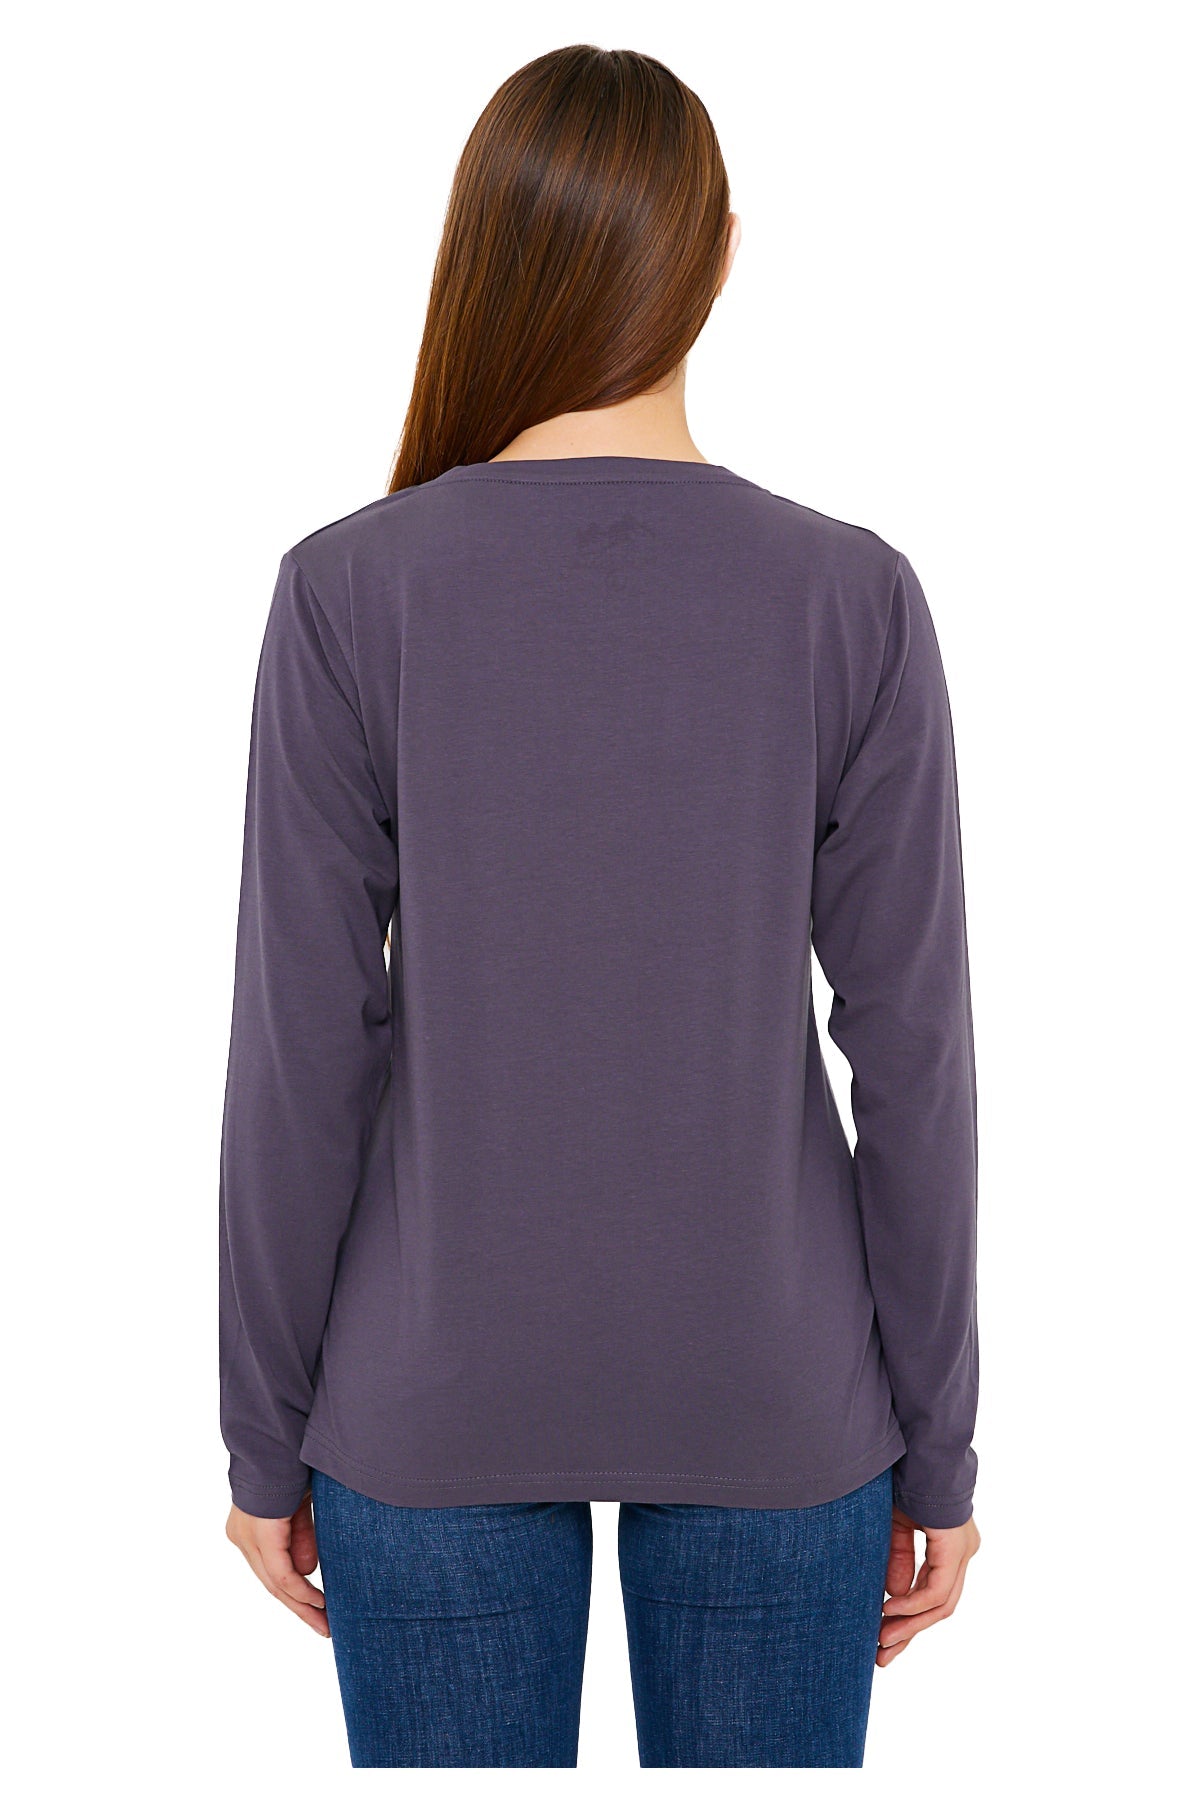 Long Sleeve V-Neck Shirts for Women & Girls - Colorful Pima Cotton-76